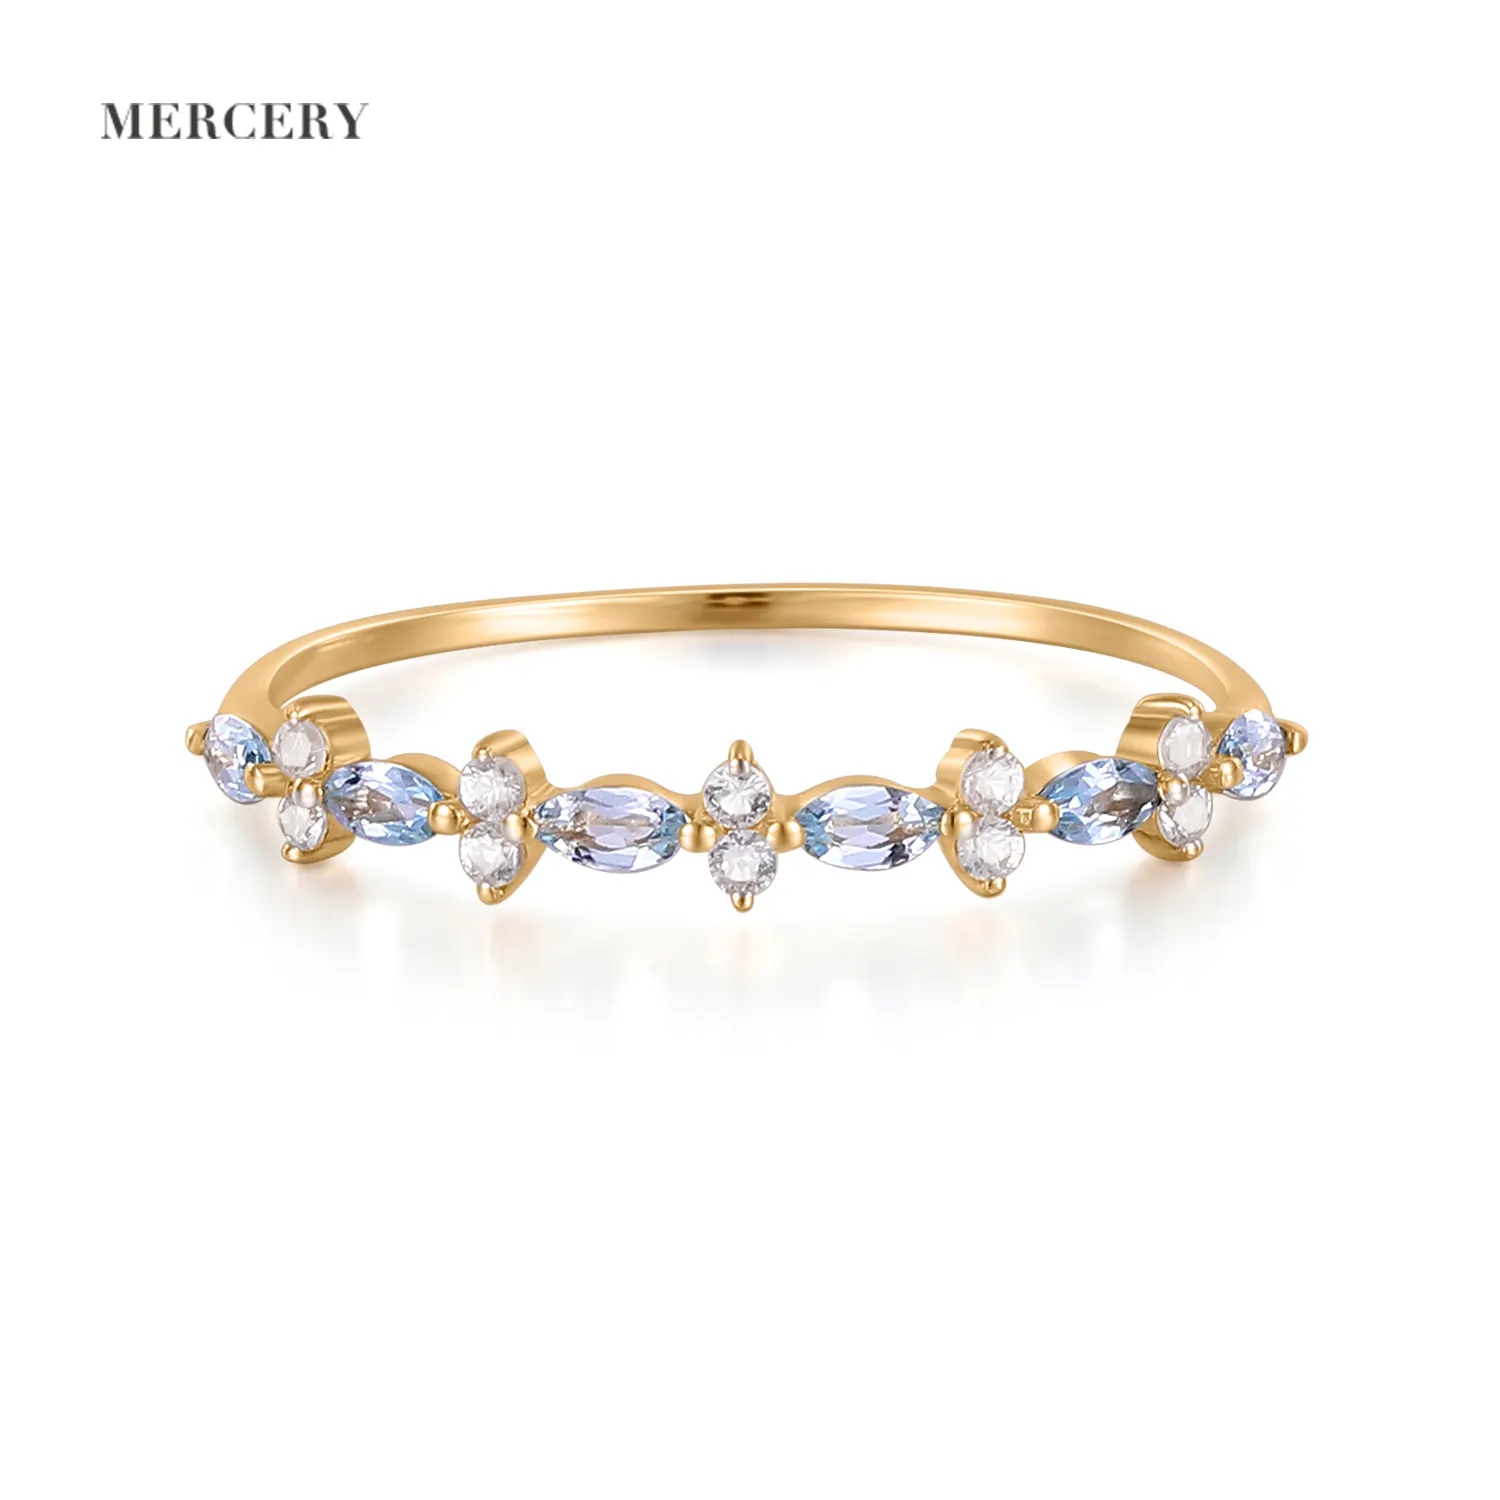 Mercery Sieraden 2022 Fashion Trend Sieraden Prachtig Ontworpen Hoge Kwaliteit 14K Solid Gold Edelsteen Ringen Voor Vrouwen